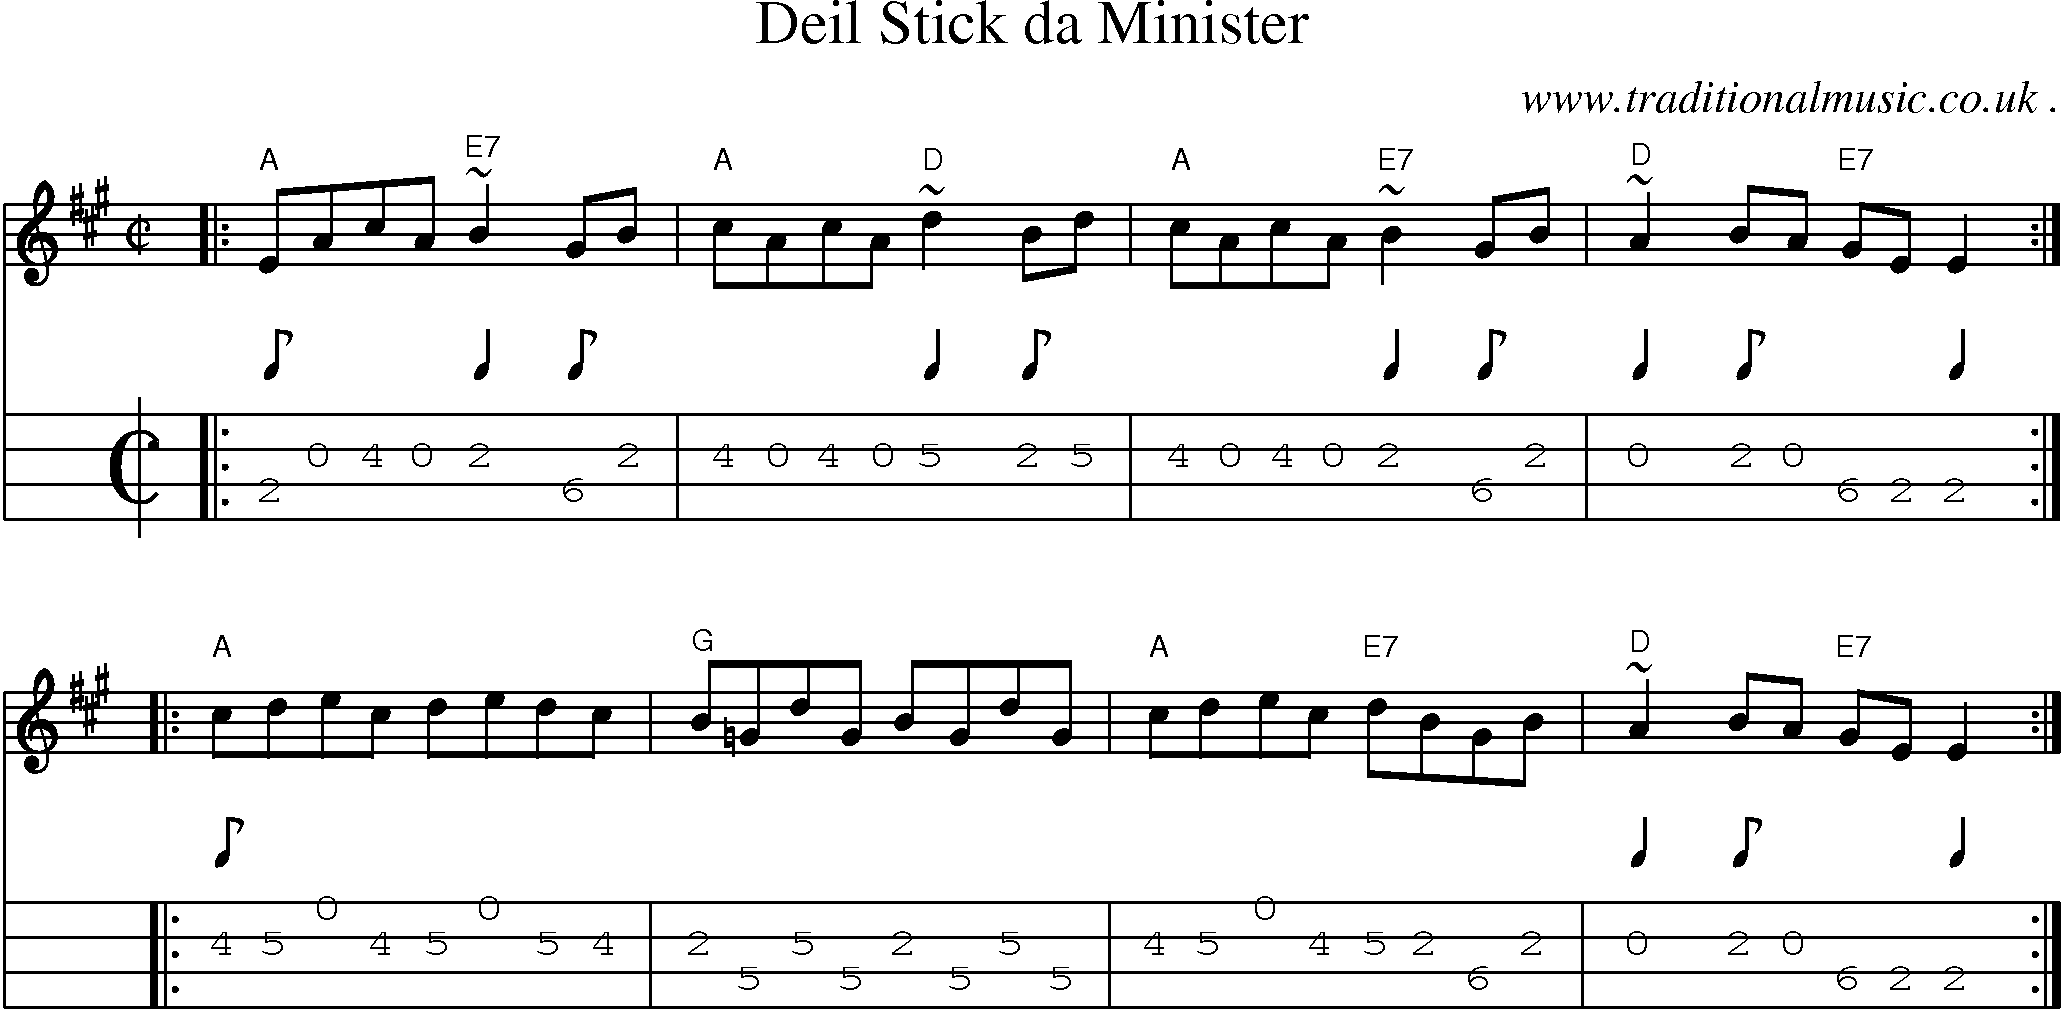 Sheet-music  score, Chords and Mandolin Tabs for Deil Stick Da Minister